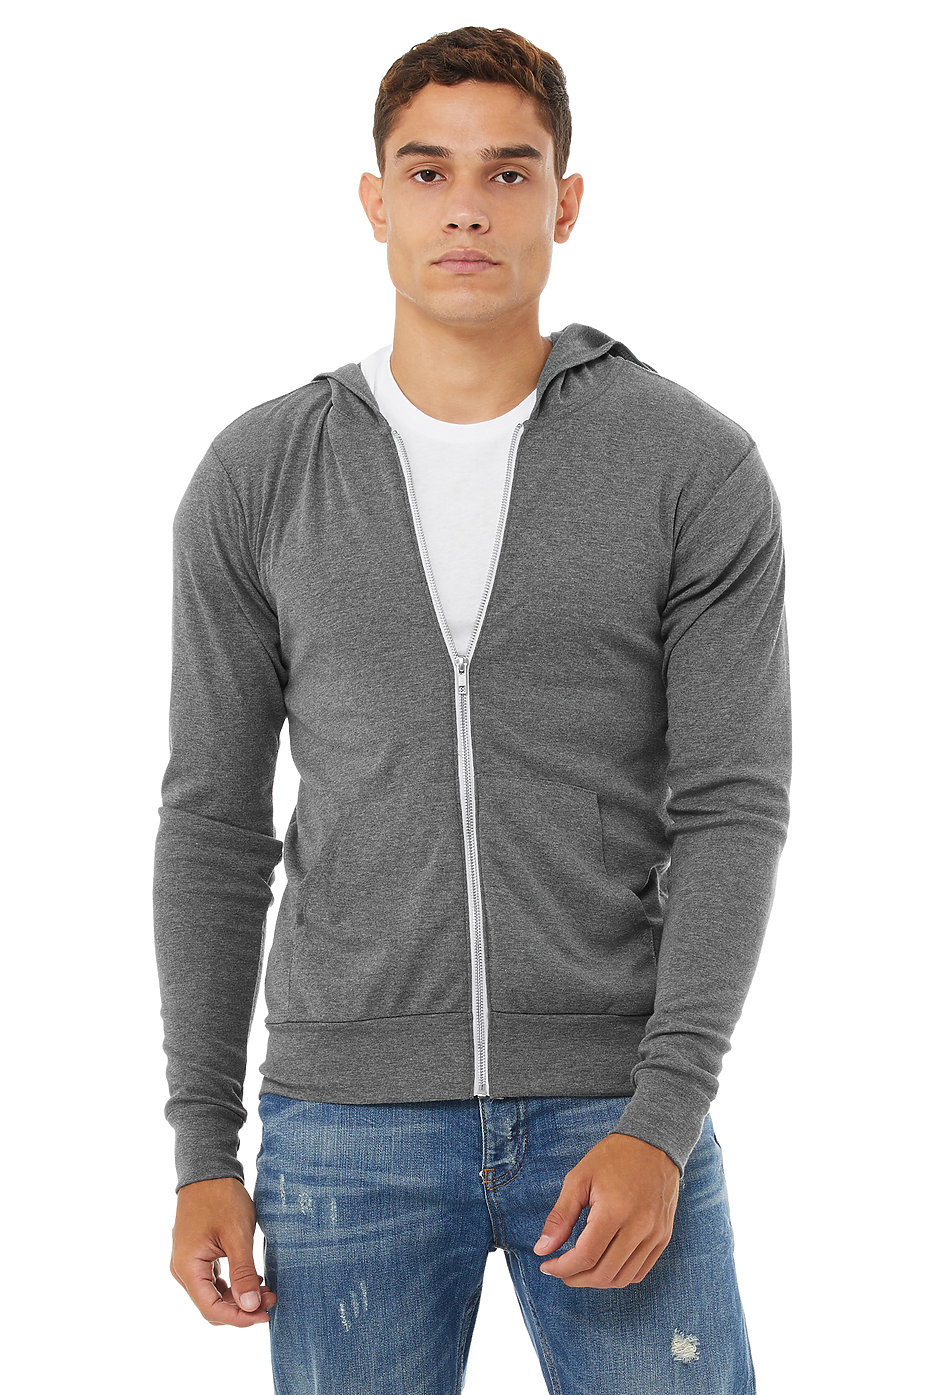 Wholesale Zip Up Hoodie | Custom Sweatshirts For Men | Wholesale ...